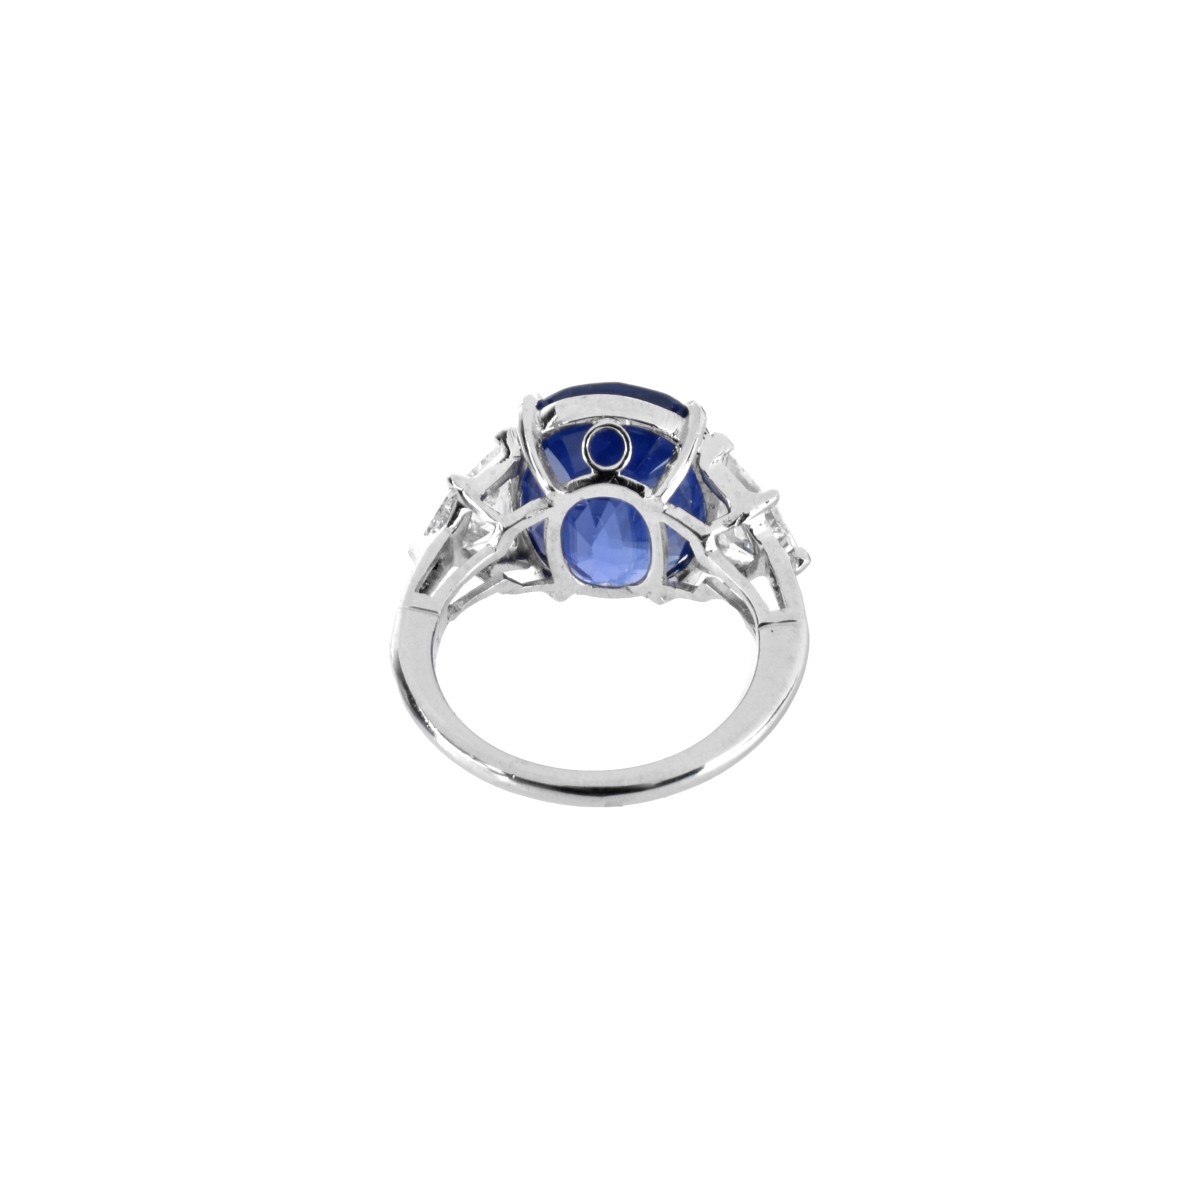 Sapphire, Diamond and Platinum Ring